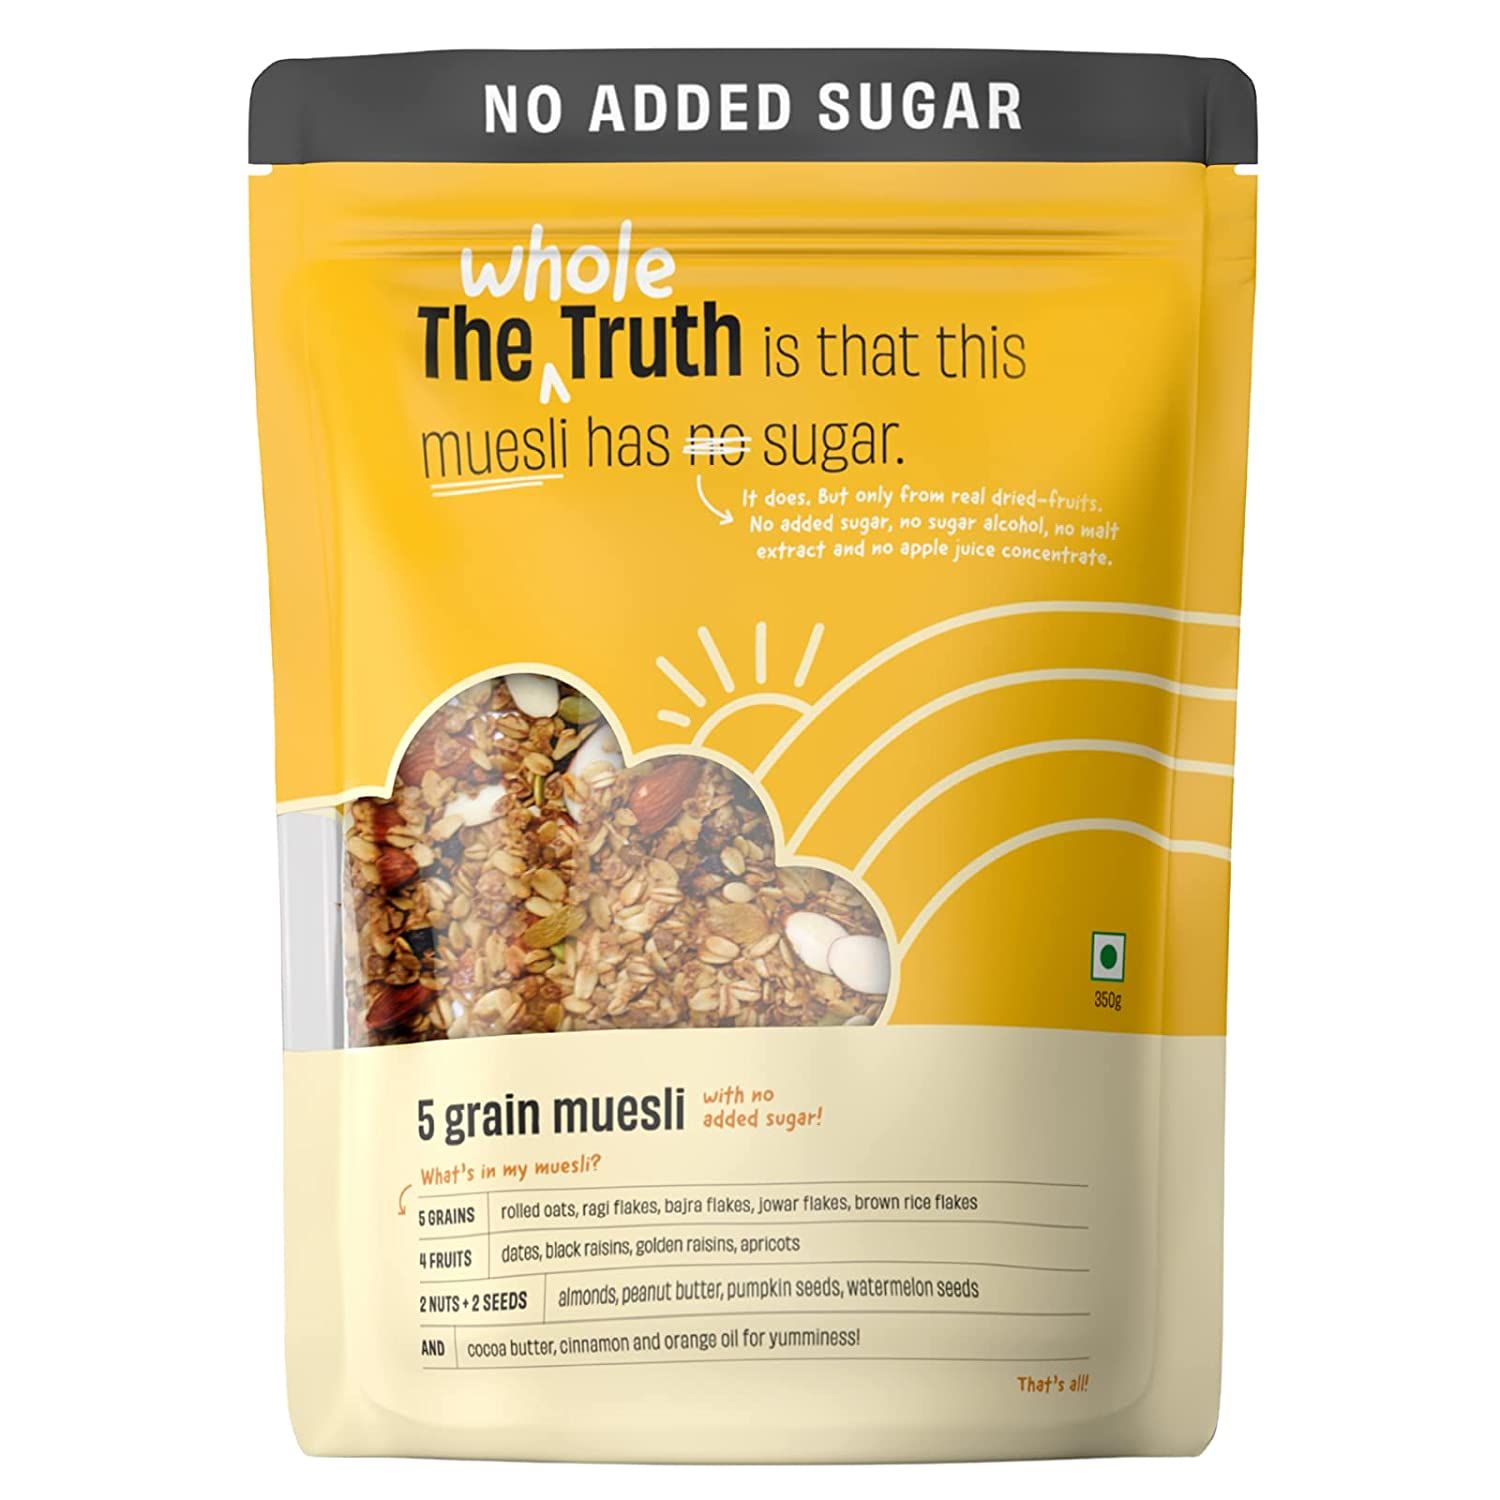 The Whole Truth - Breakfast Muesli - No Added Sugar 5 Grain Muesli Image